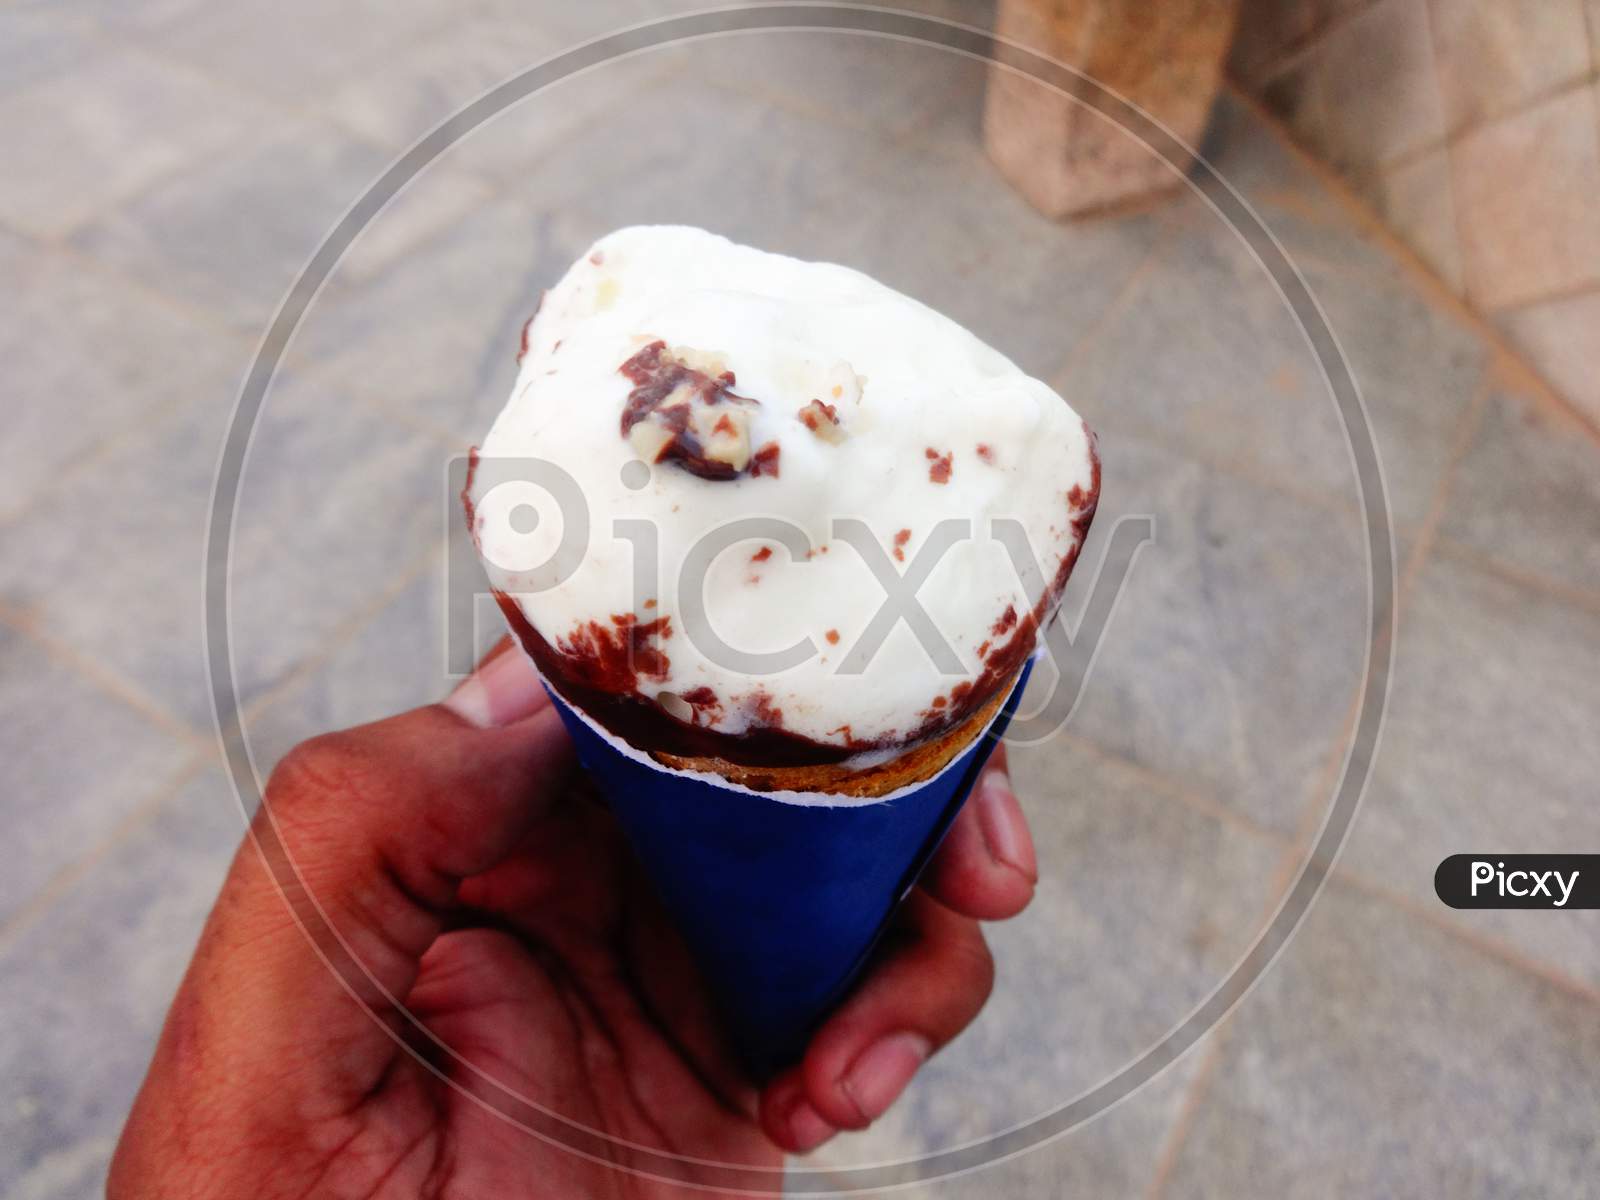 Whipped cream vanilla flavour chocolate ice cream in hand